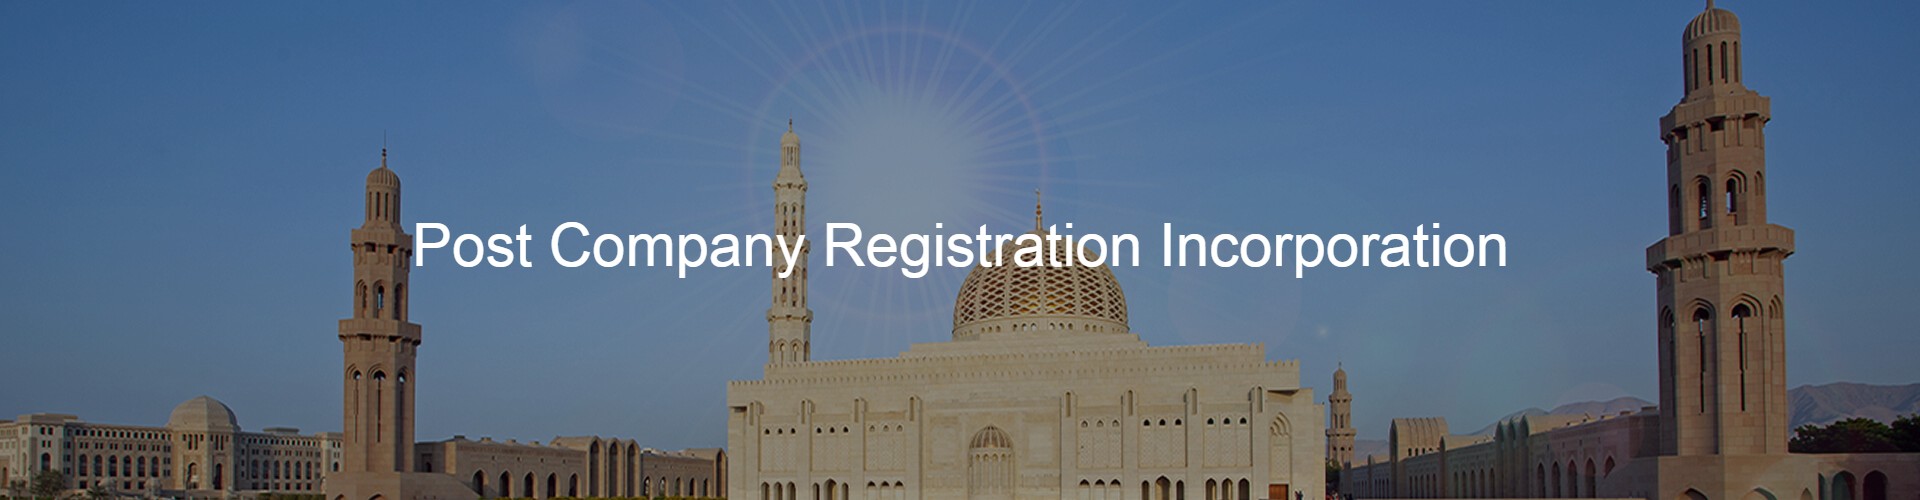 Post Company Registration Incorporation in Oman